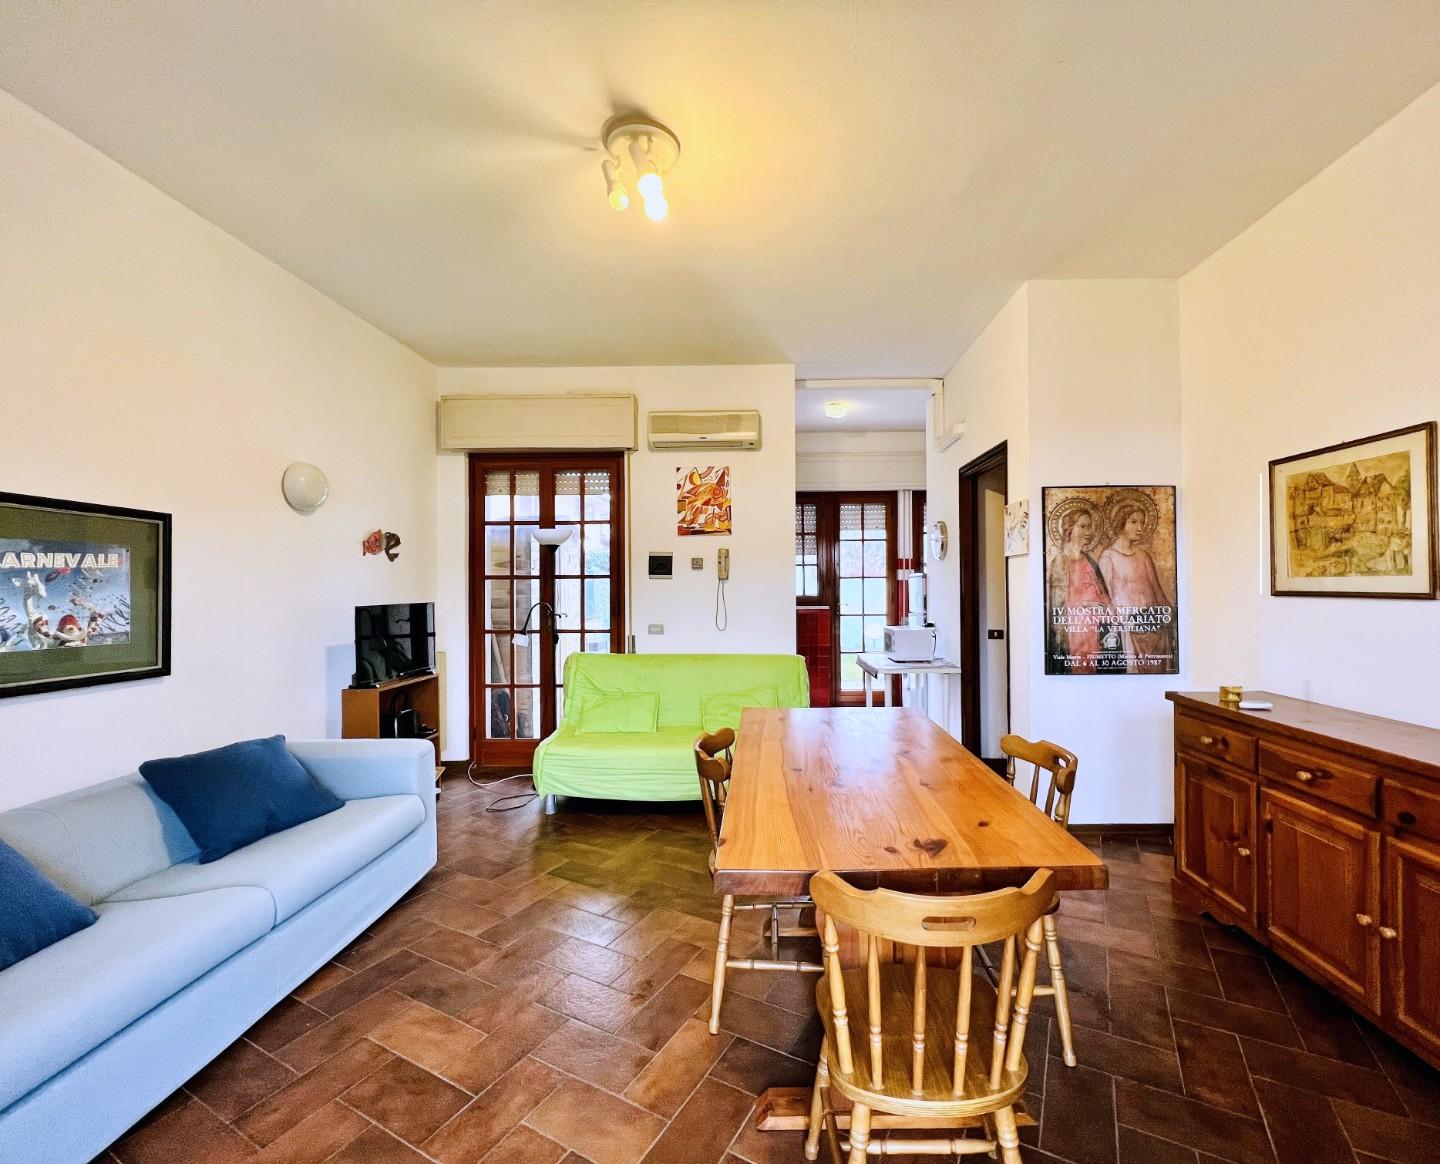 Appartamento in case vacanze a Pietrasanta (LU)